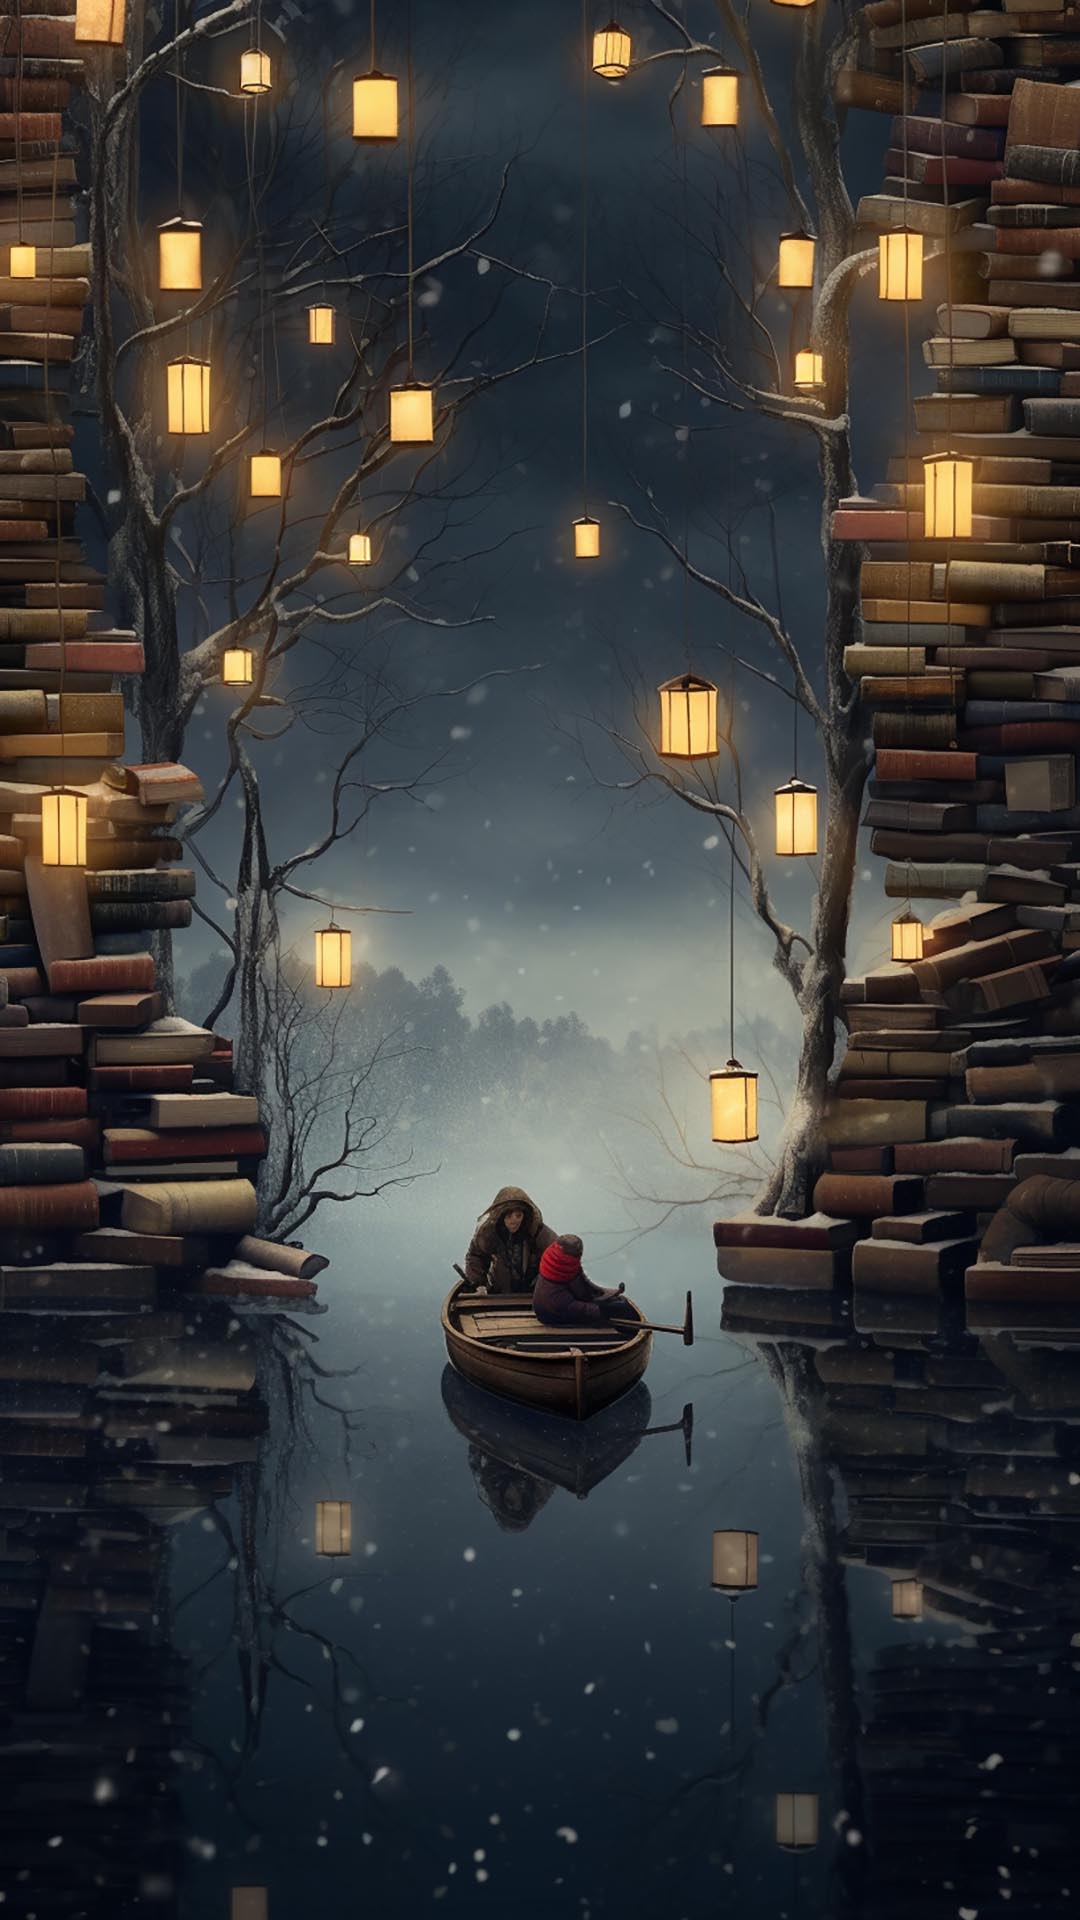 Lanterns and mist behind stacks of books in the dark